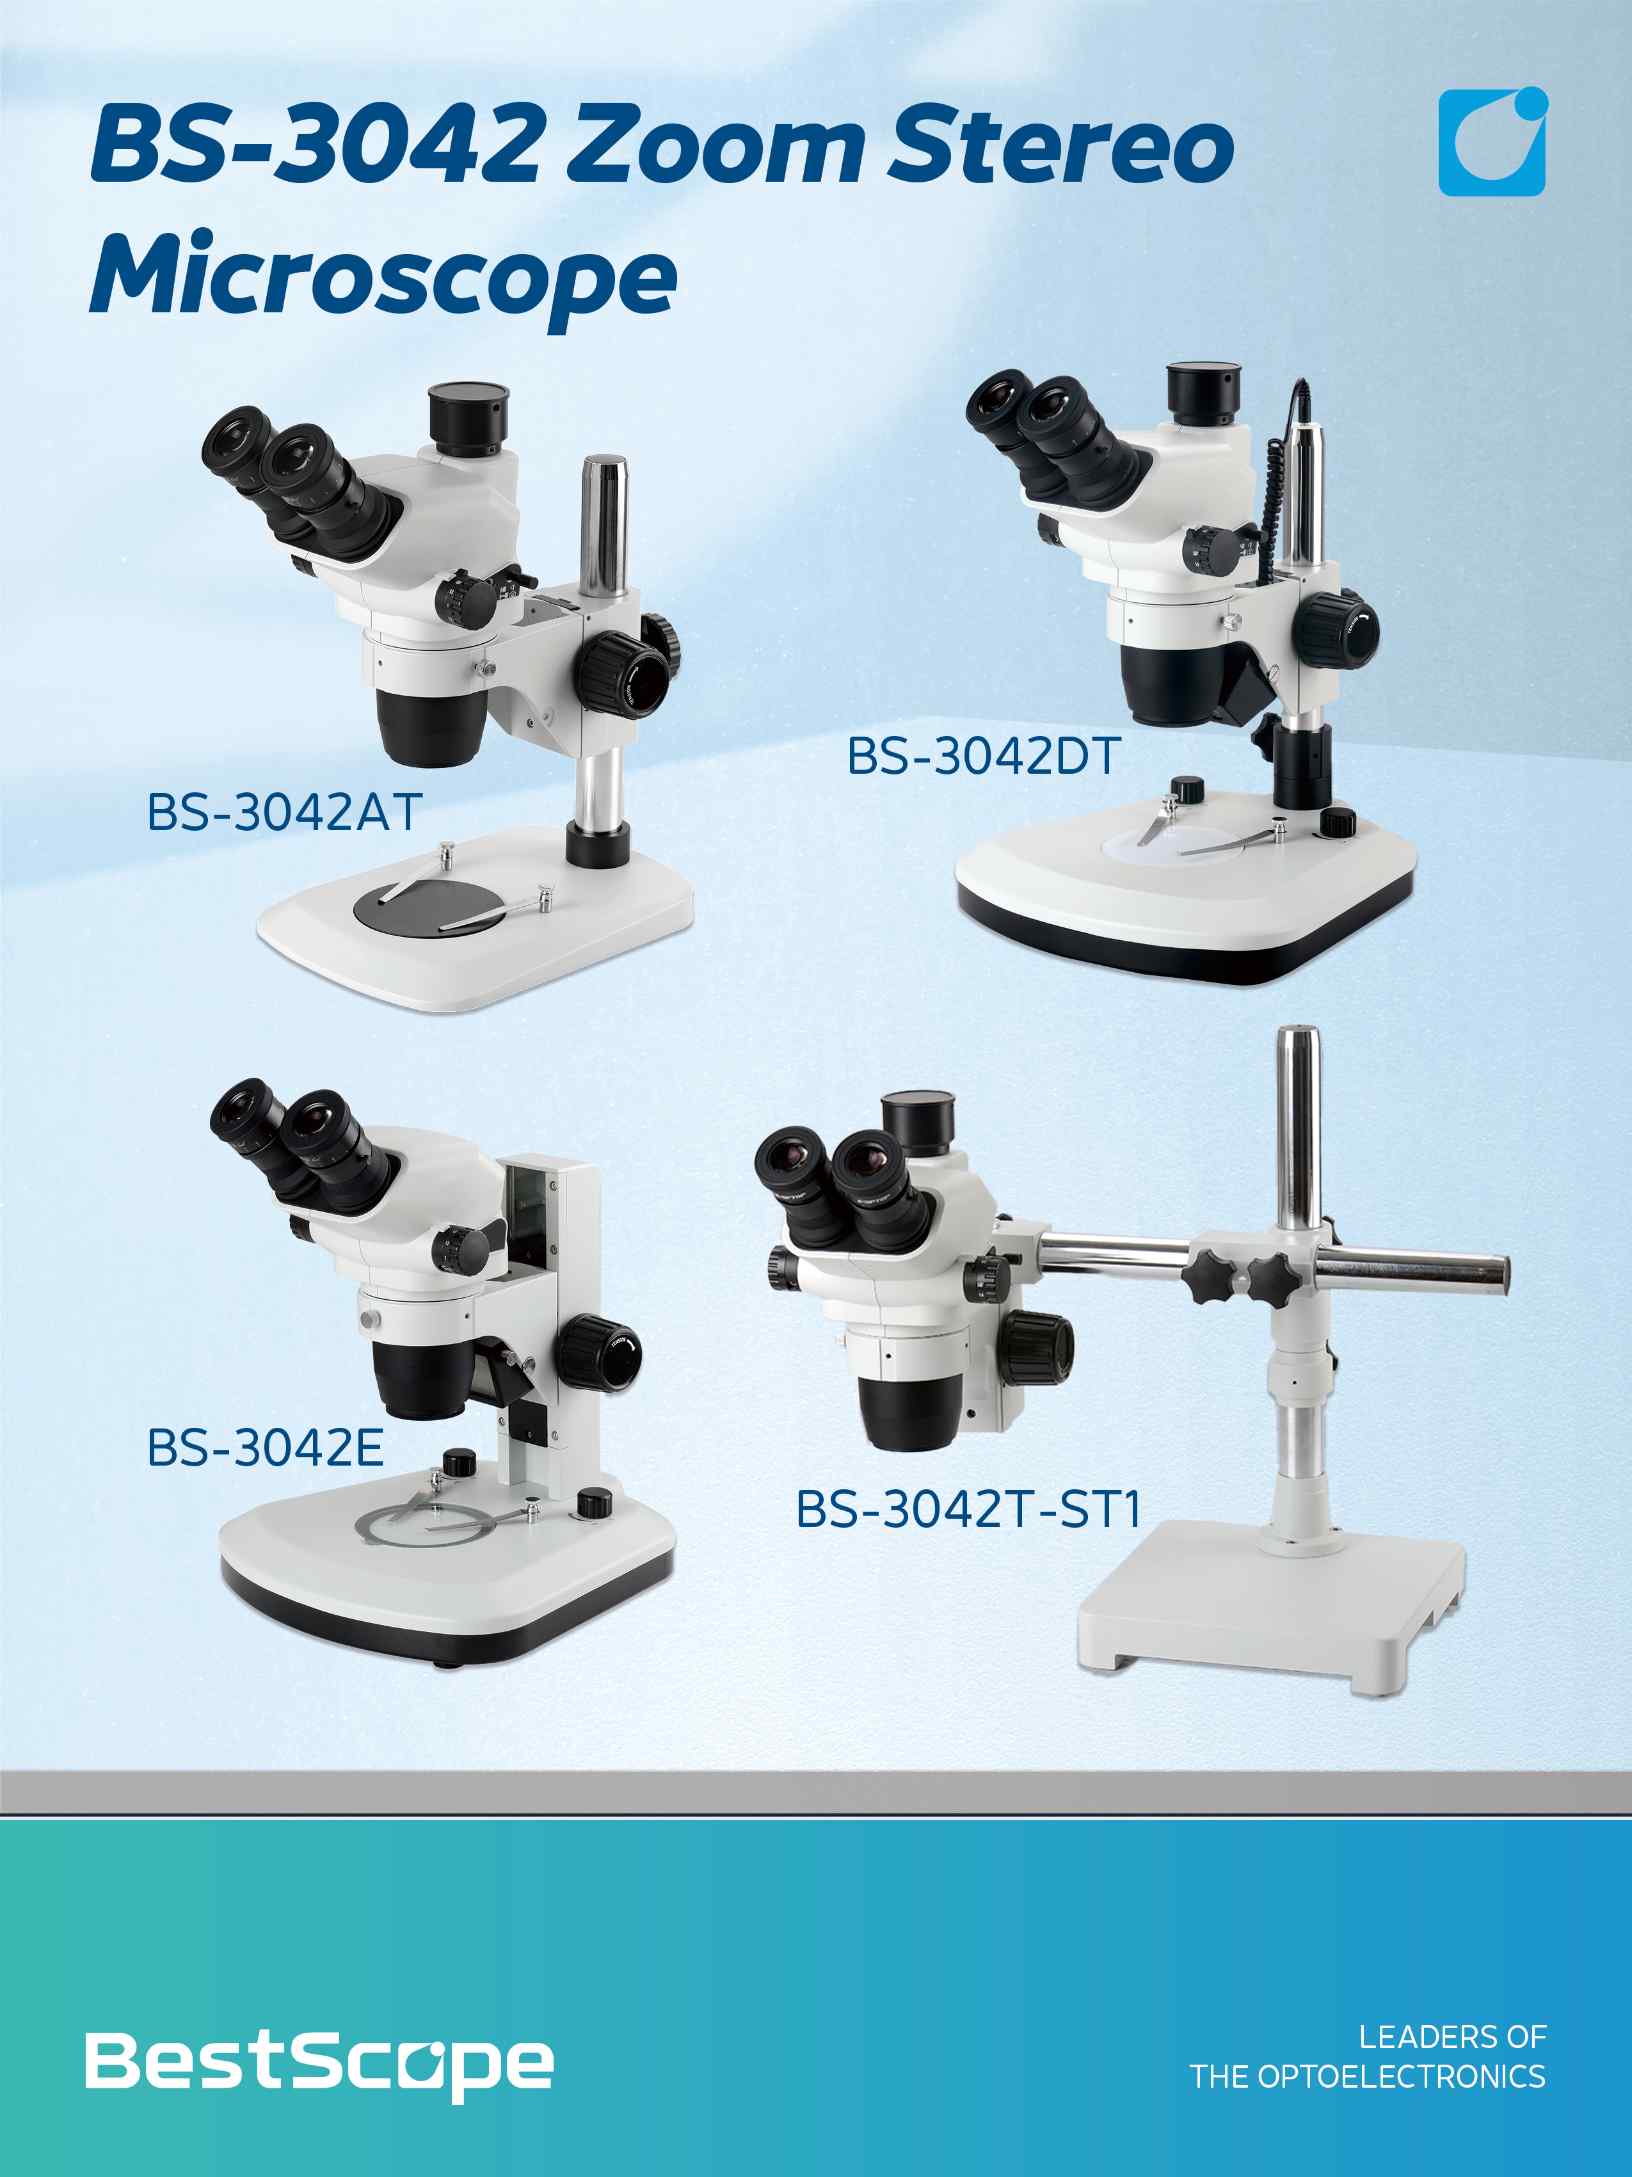 BS-3042 Zoom Stereo Microscope